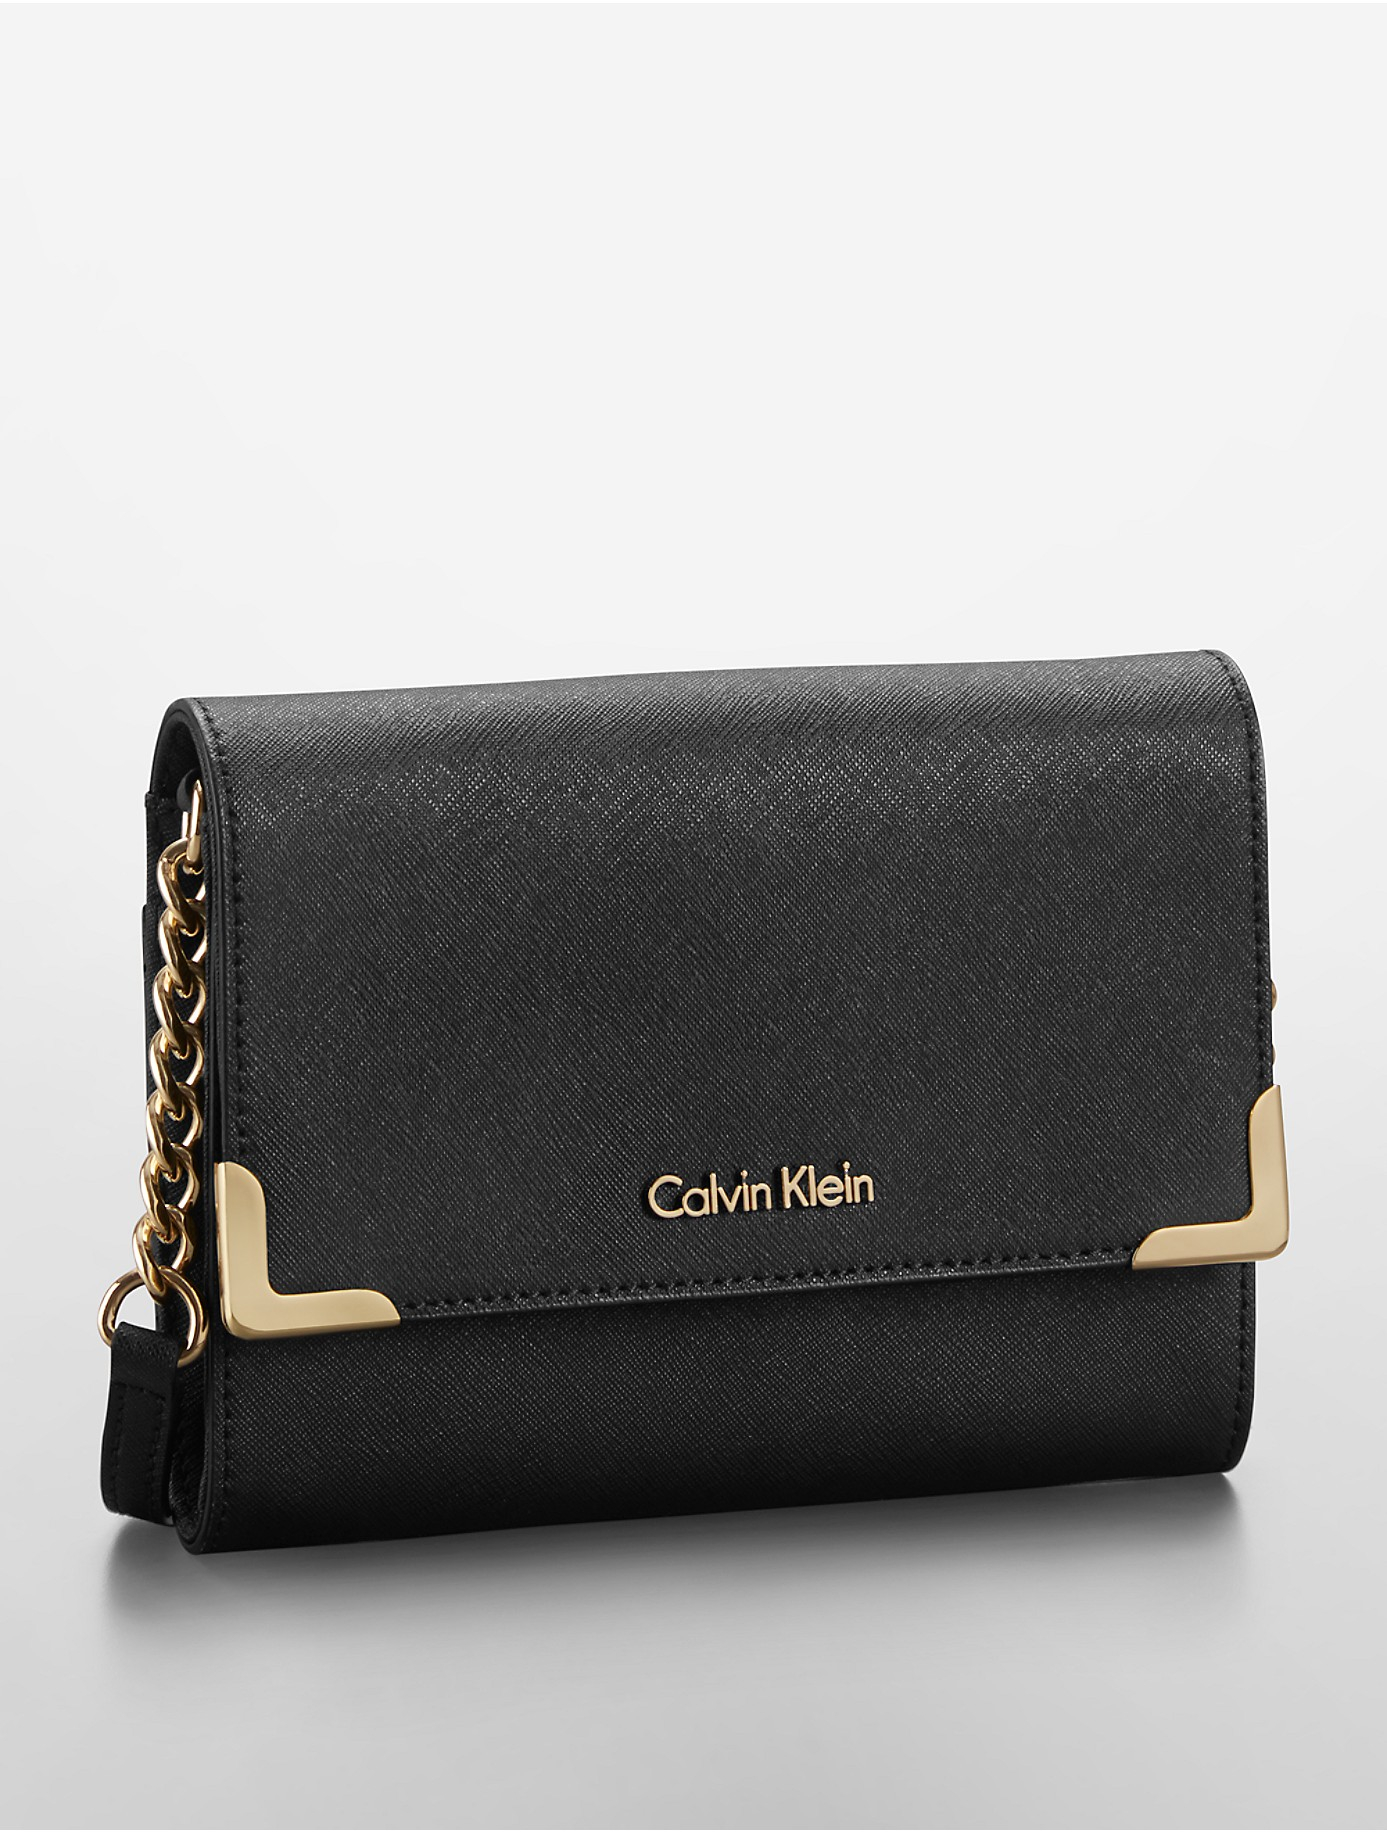 Calvin Klein Saffiano Top Zip Medium Satchel, Black/Gold: Handbags